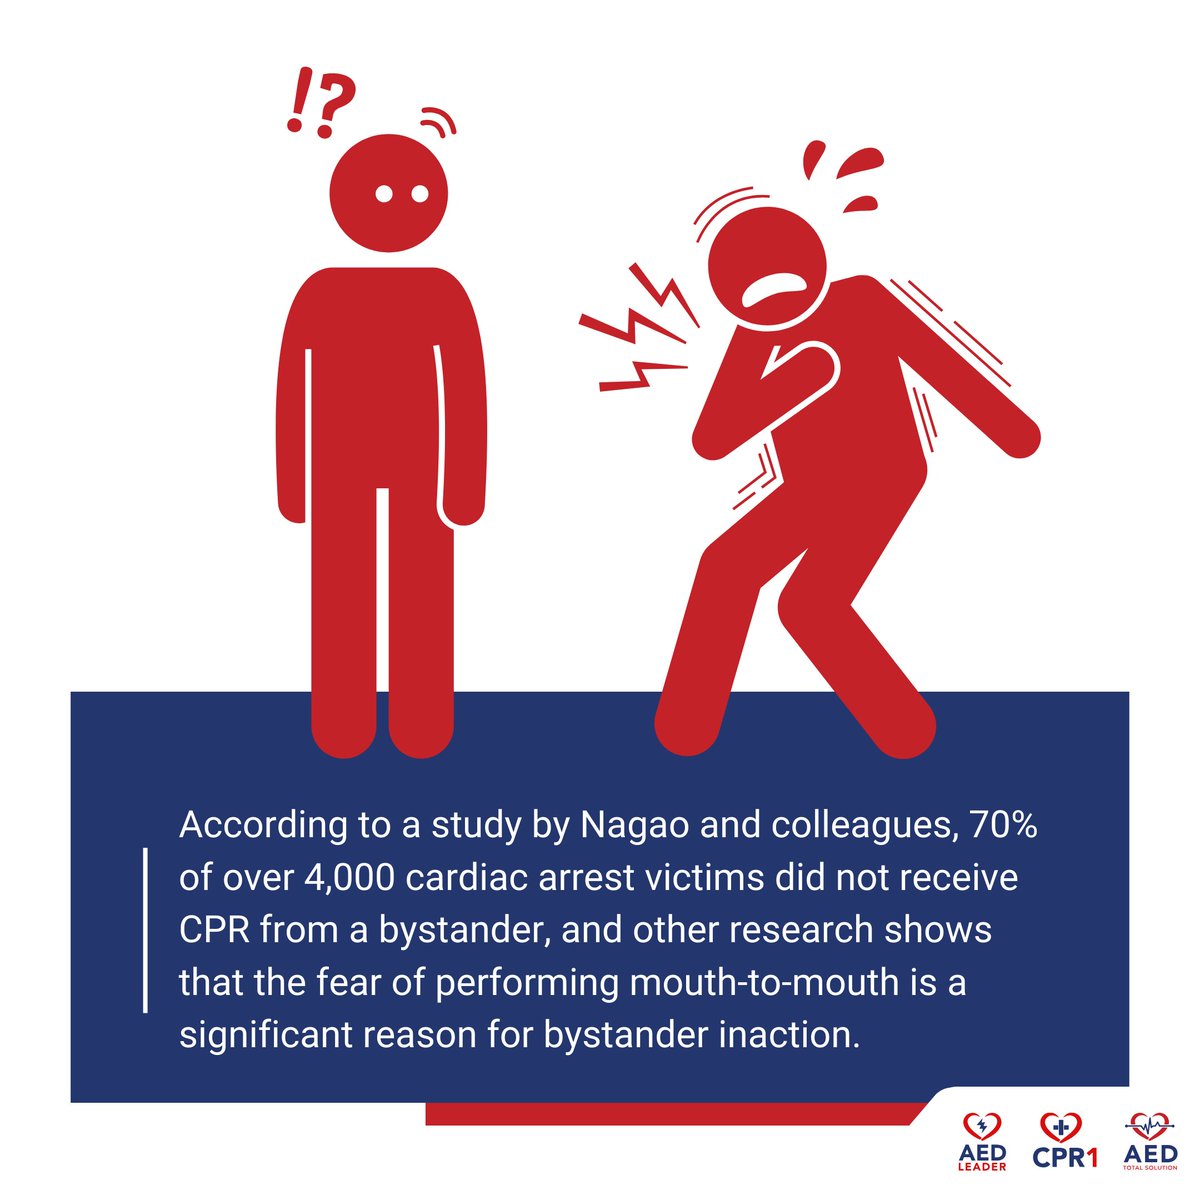 CPR1.com
#SaveALife #CPRTraining #lDefibrillator #EmergencyResponse #FirstAid